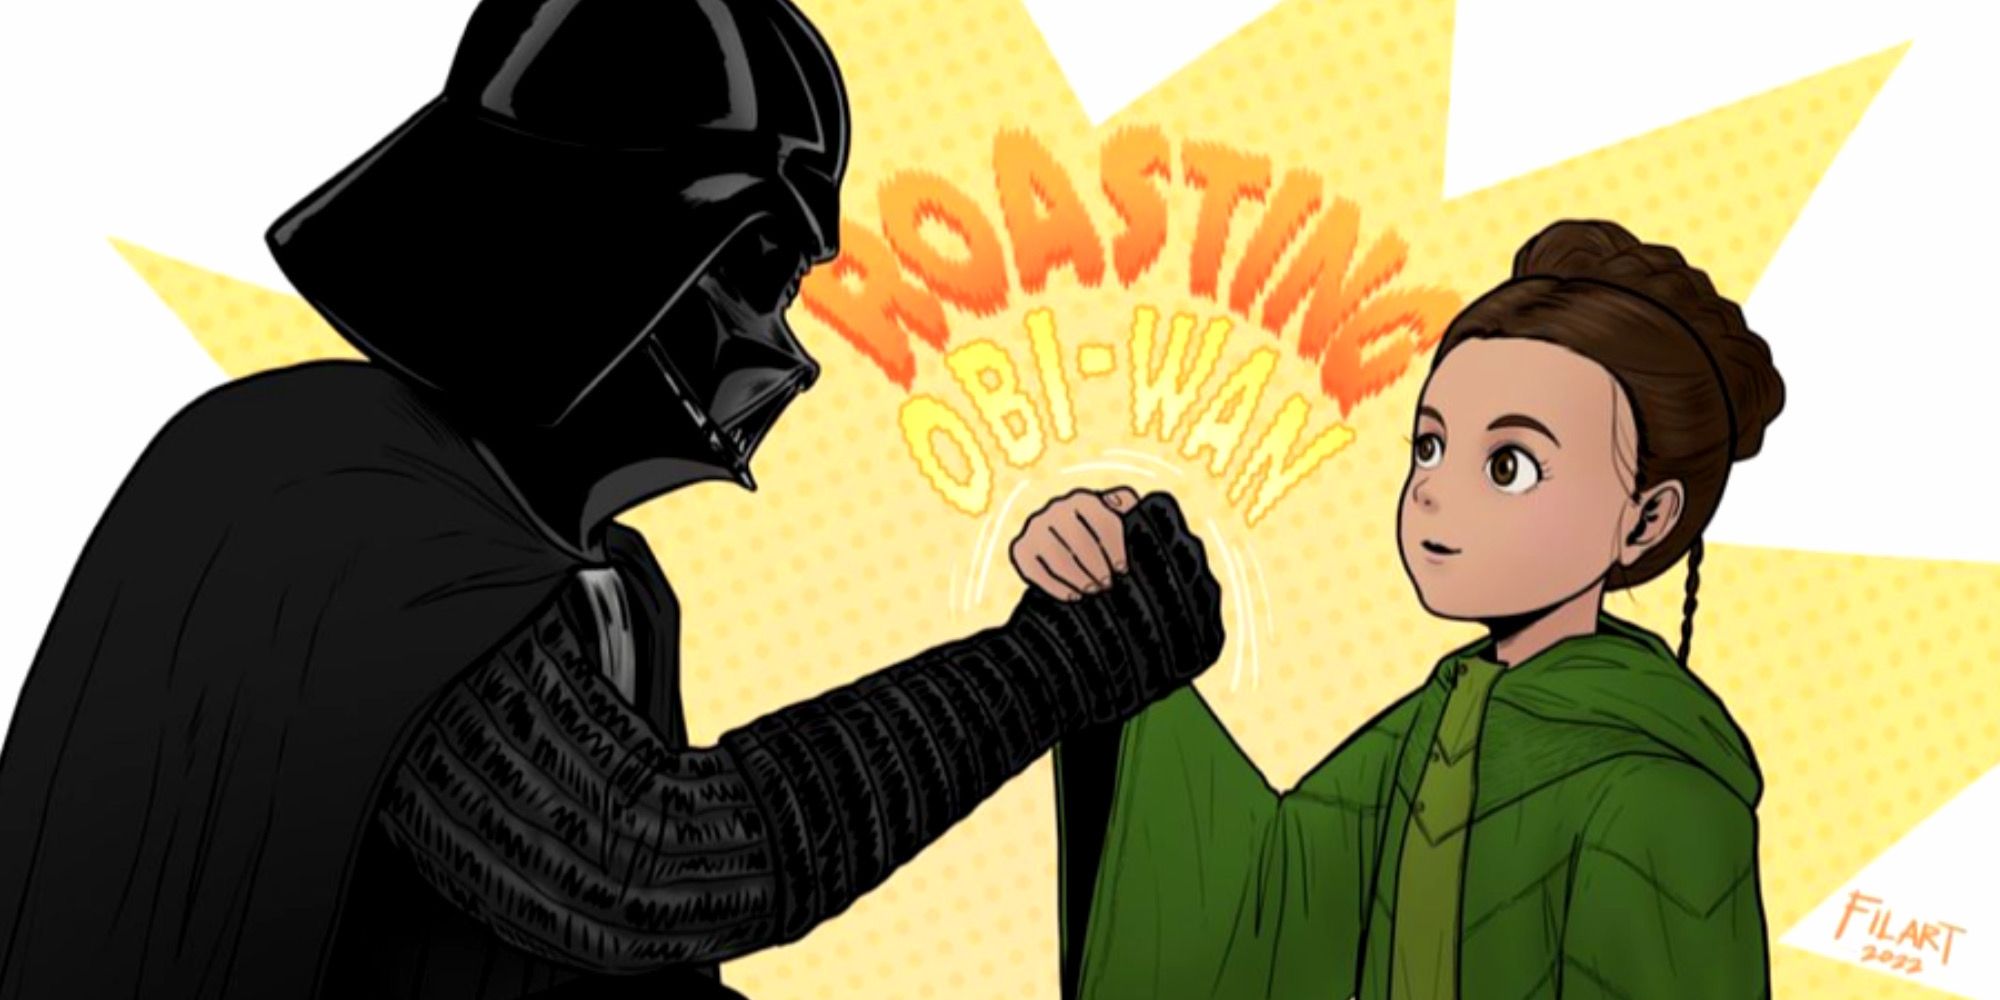 Darth Vader And Leia Organa Unite In Hilarious Comic